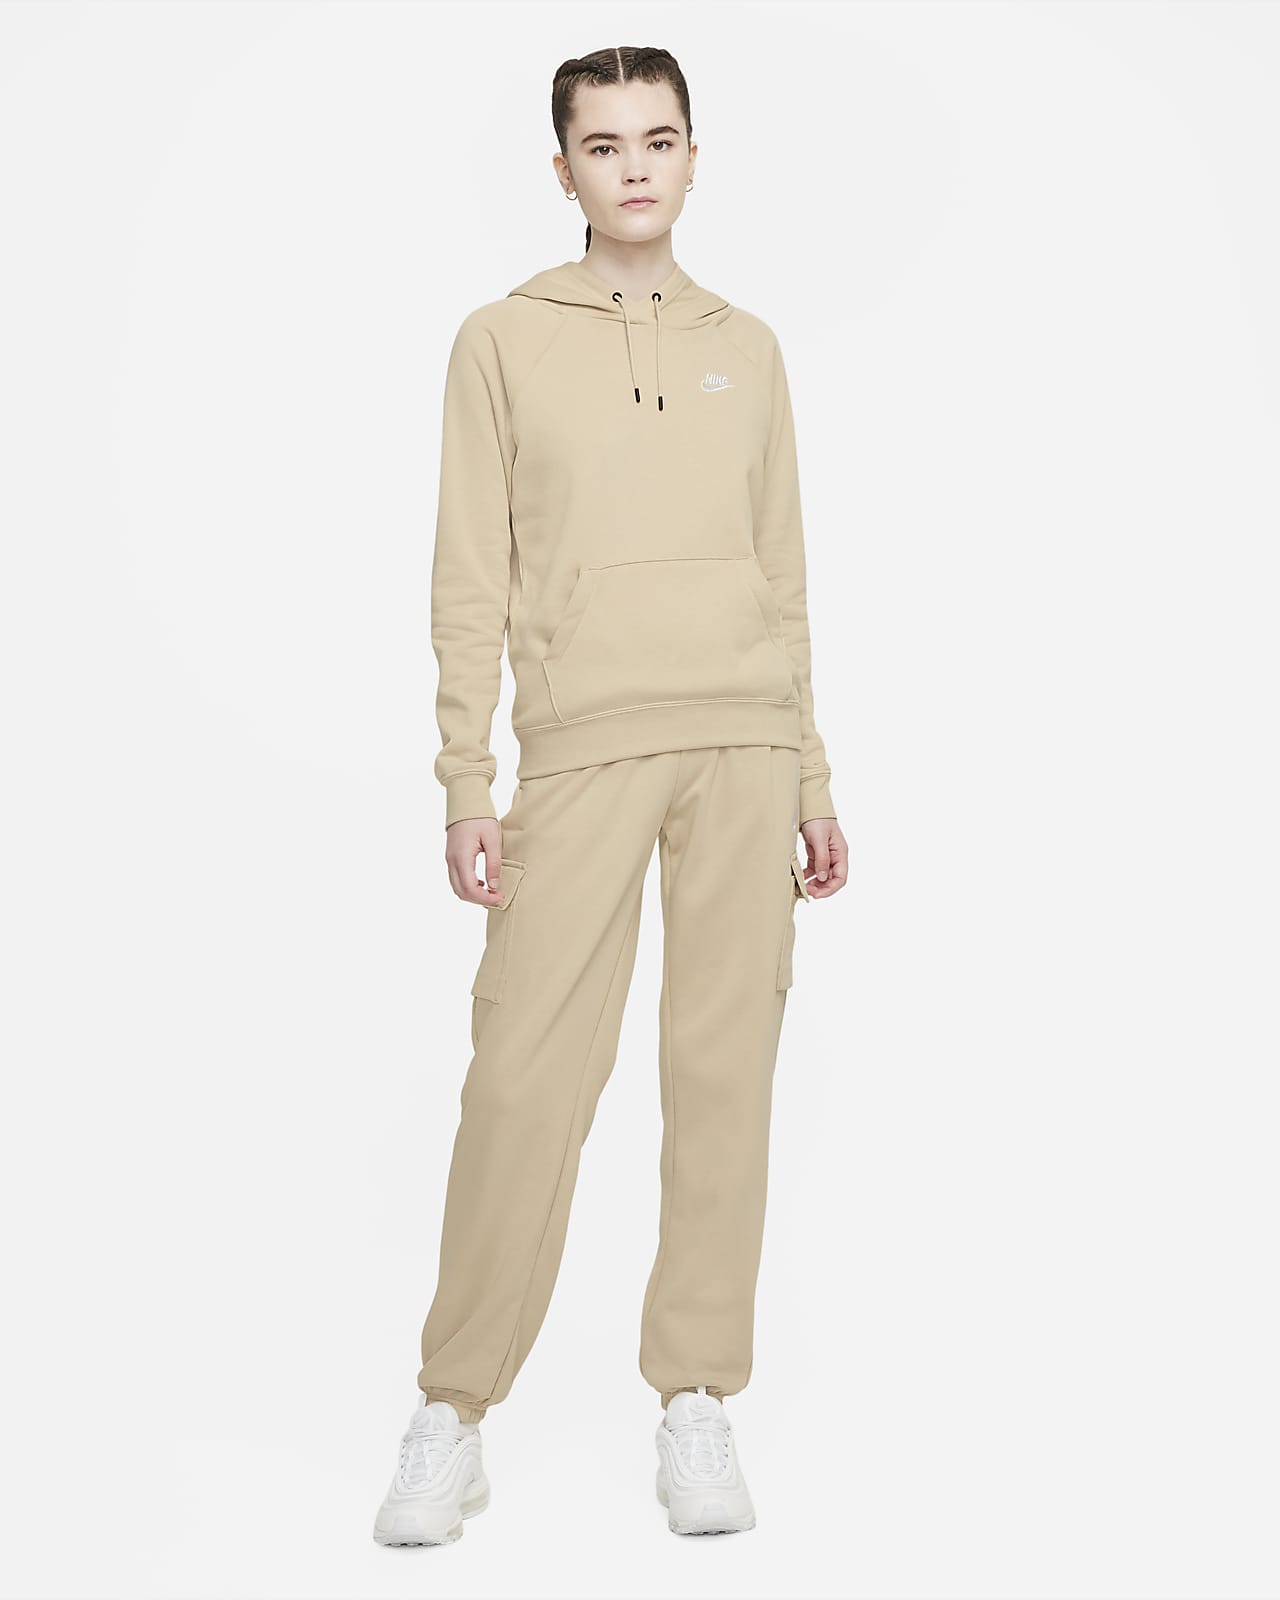 Nike Women's Sportswear Essentials Pullover Sweatshirt Hoodie, Fleece,  Kangaroo Pocket